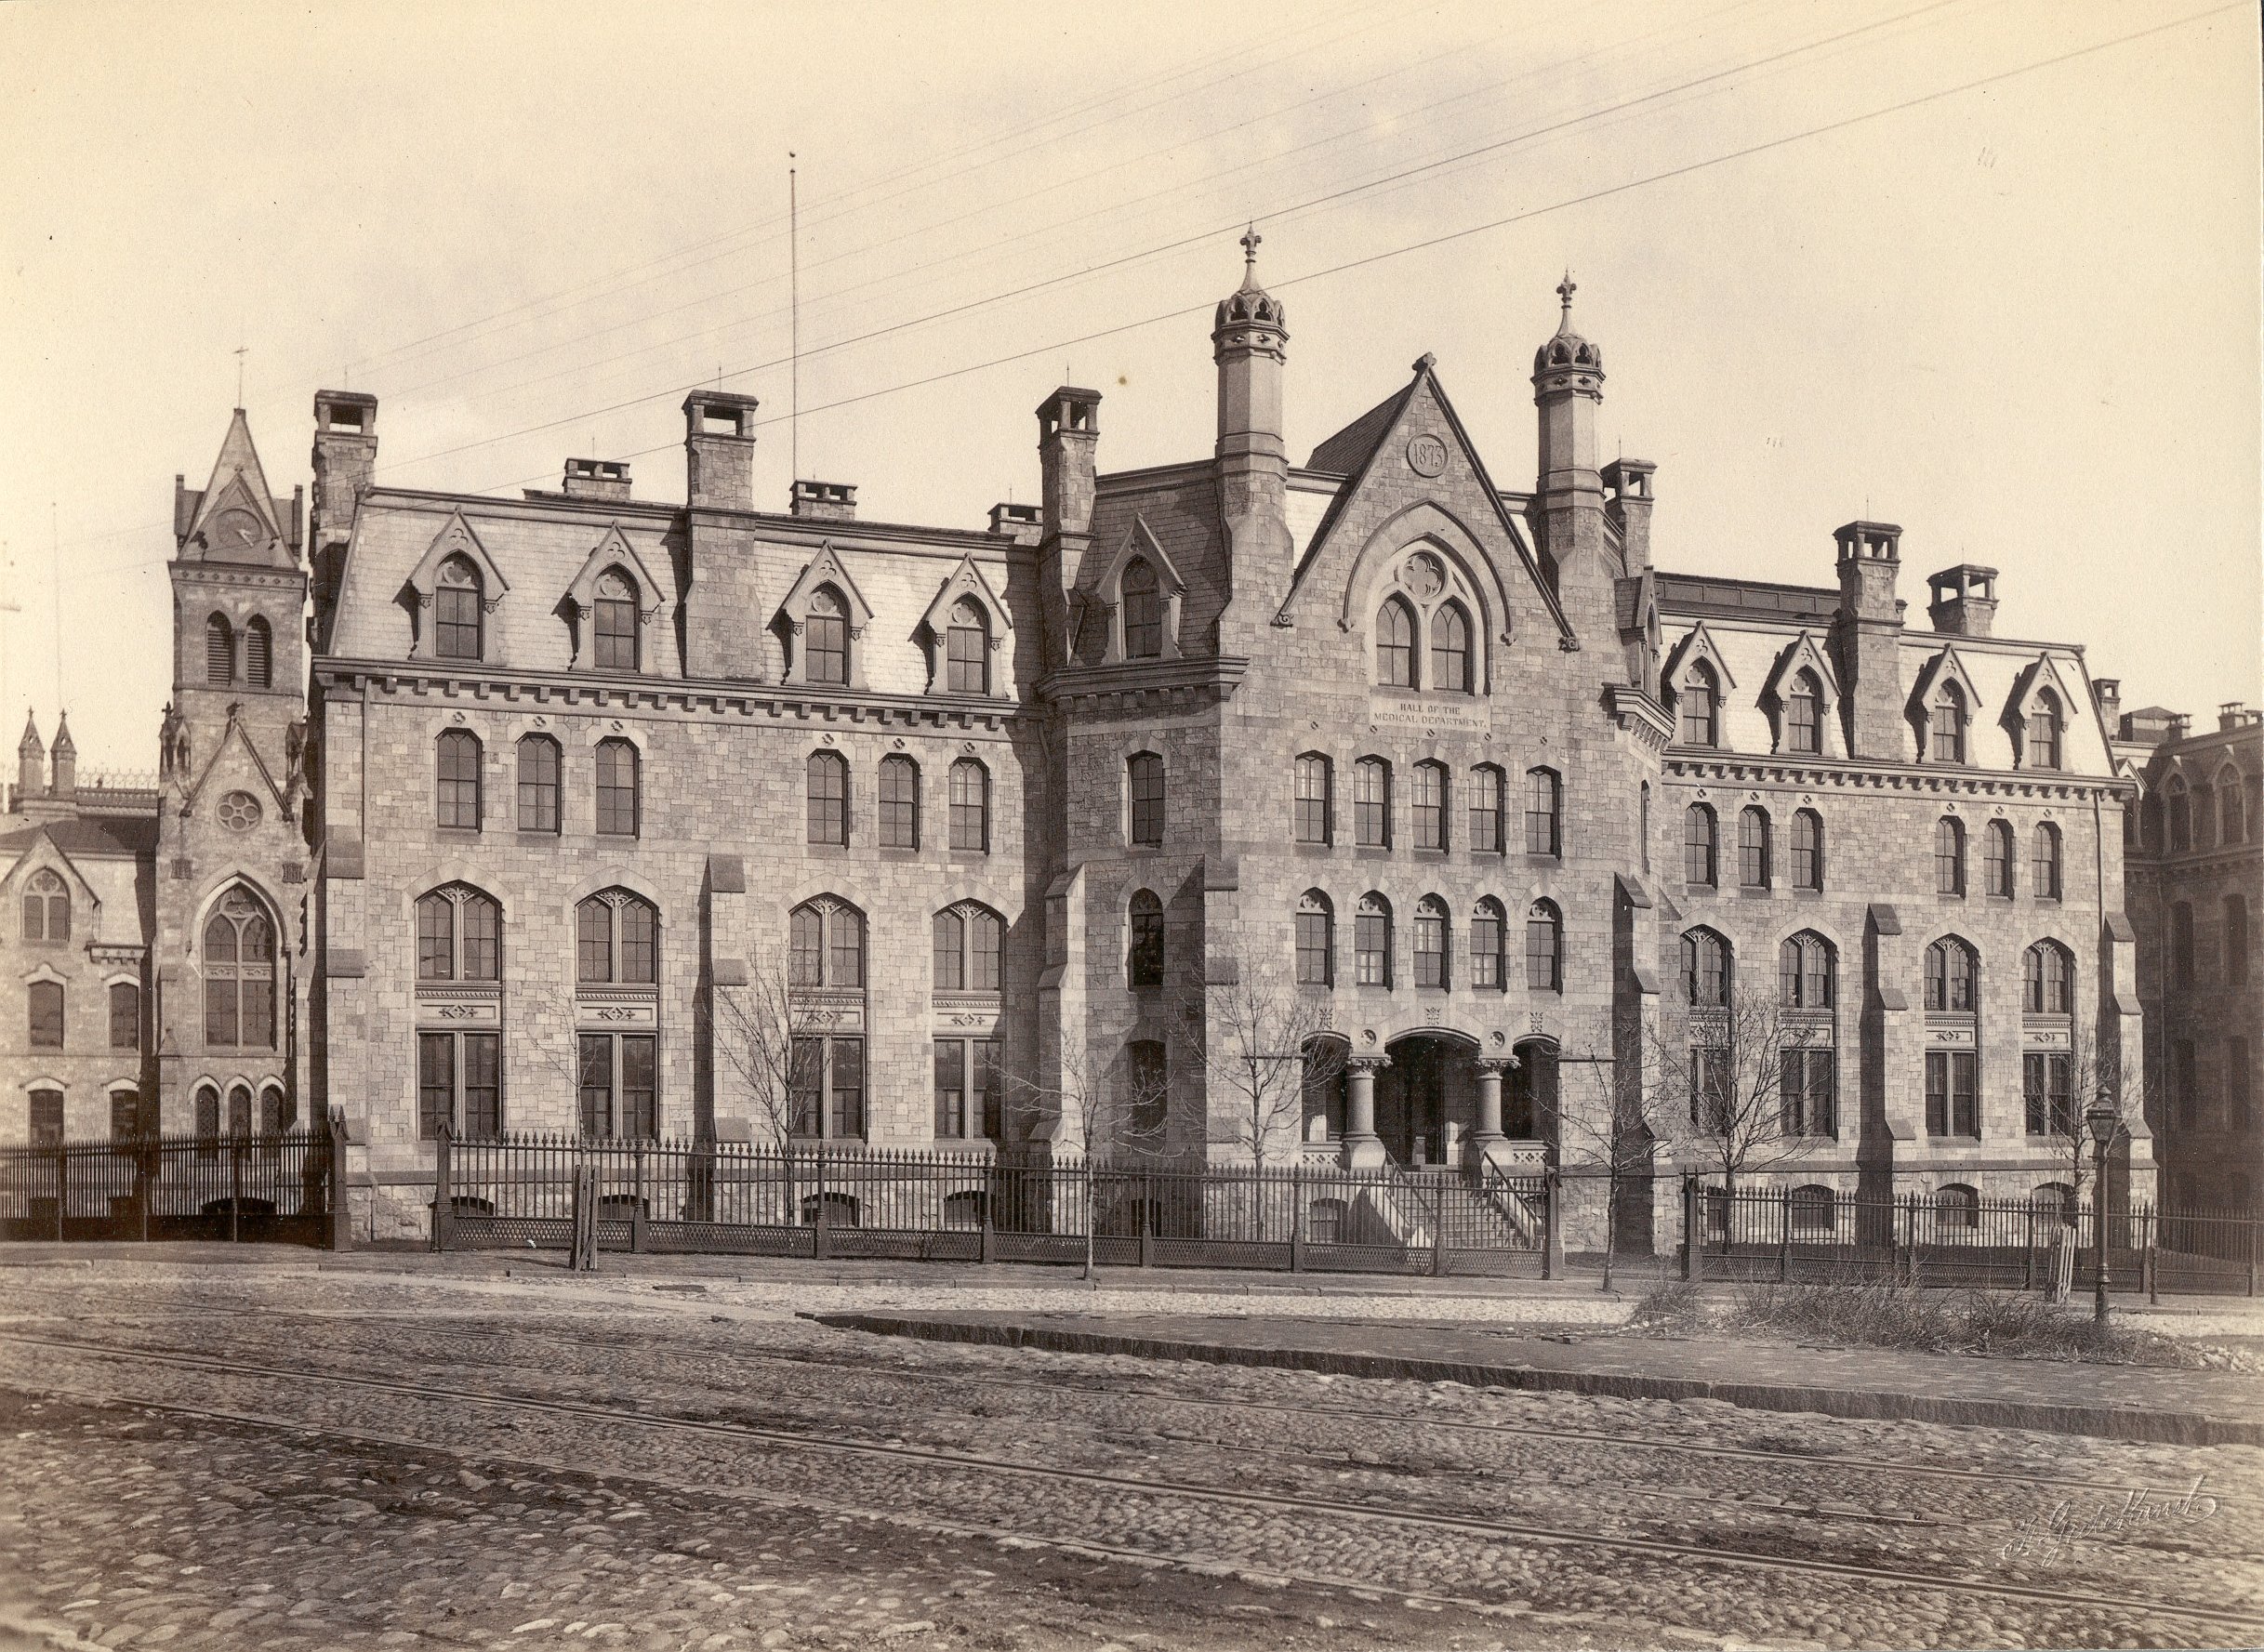 Univ of Pennsylvania Medical Hall 1890